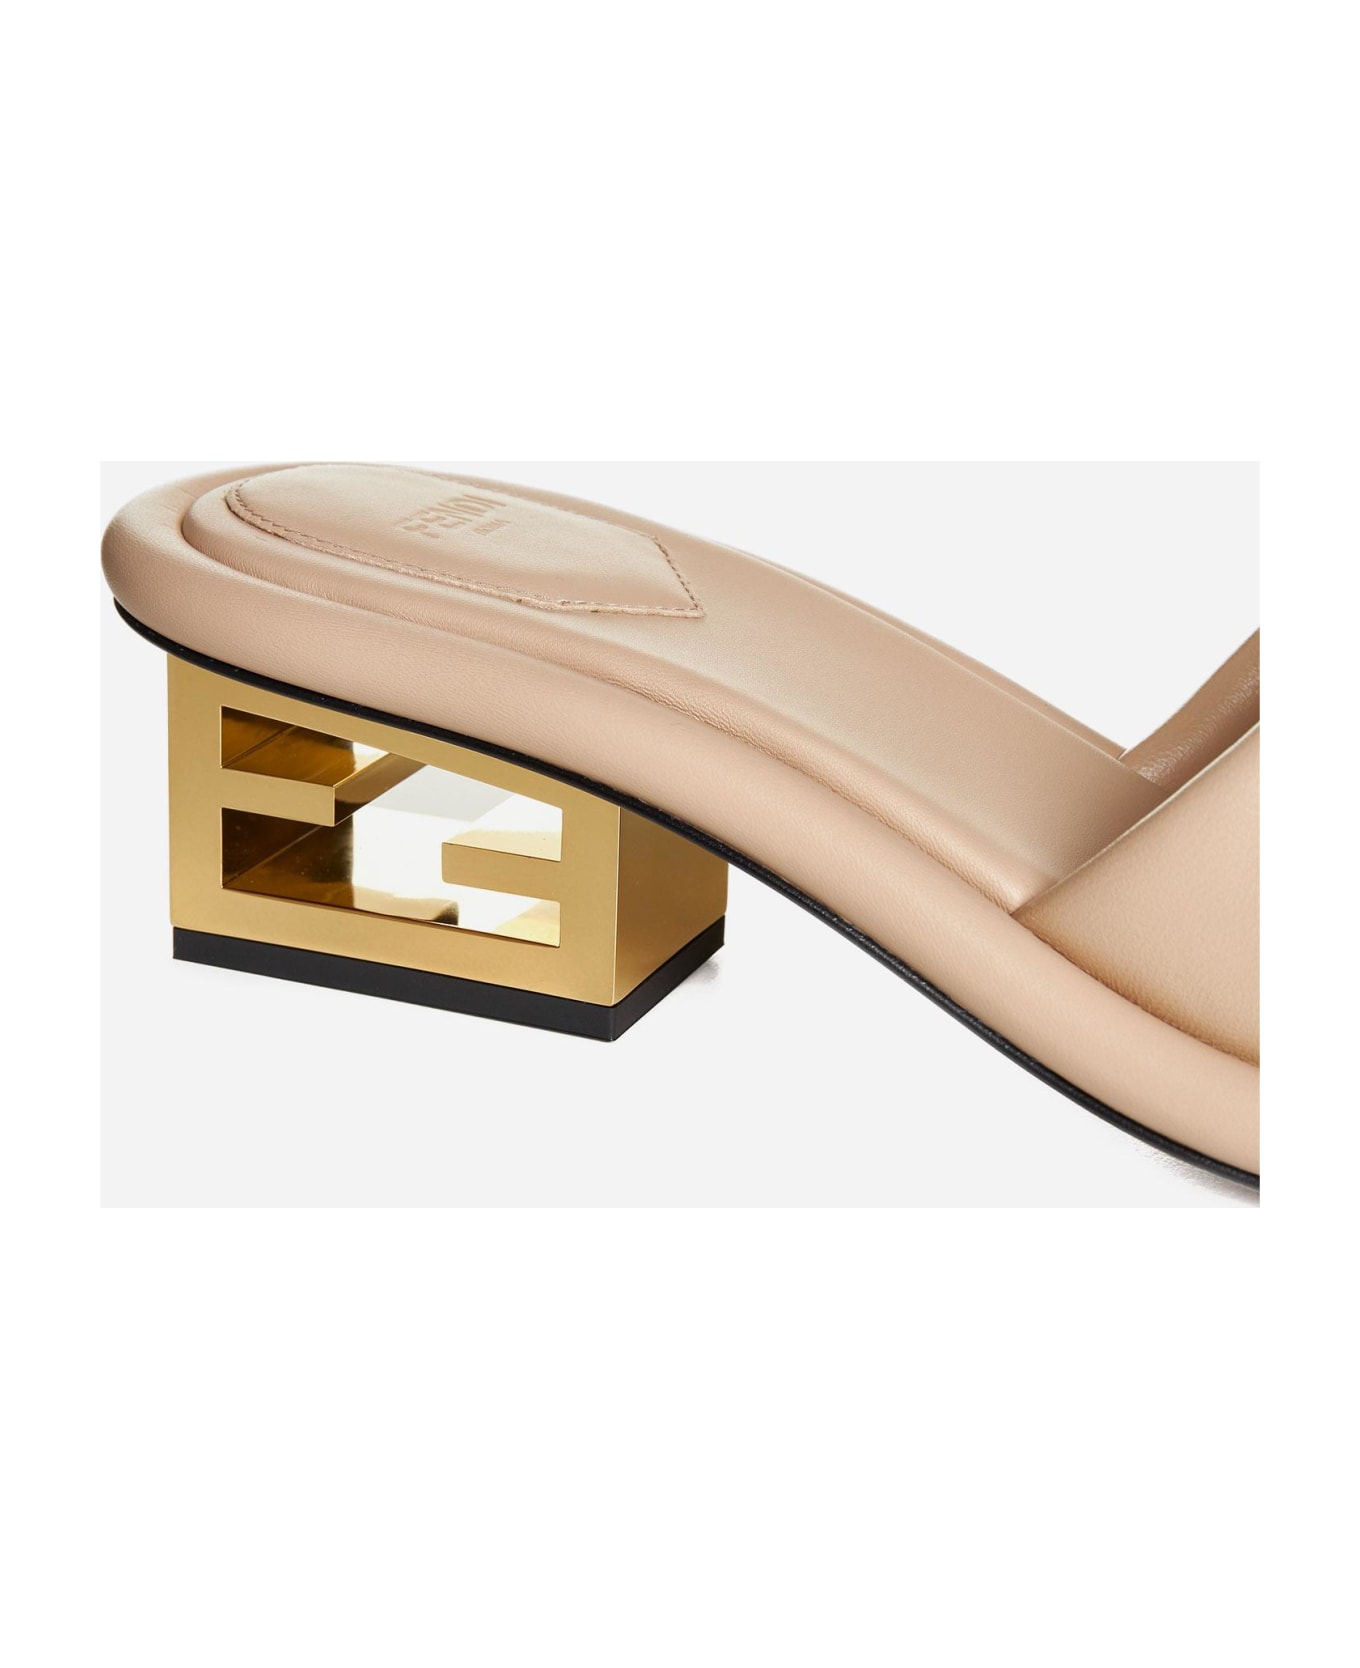 Fendi Baguette Nappa Leather Sandals - Beige